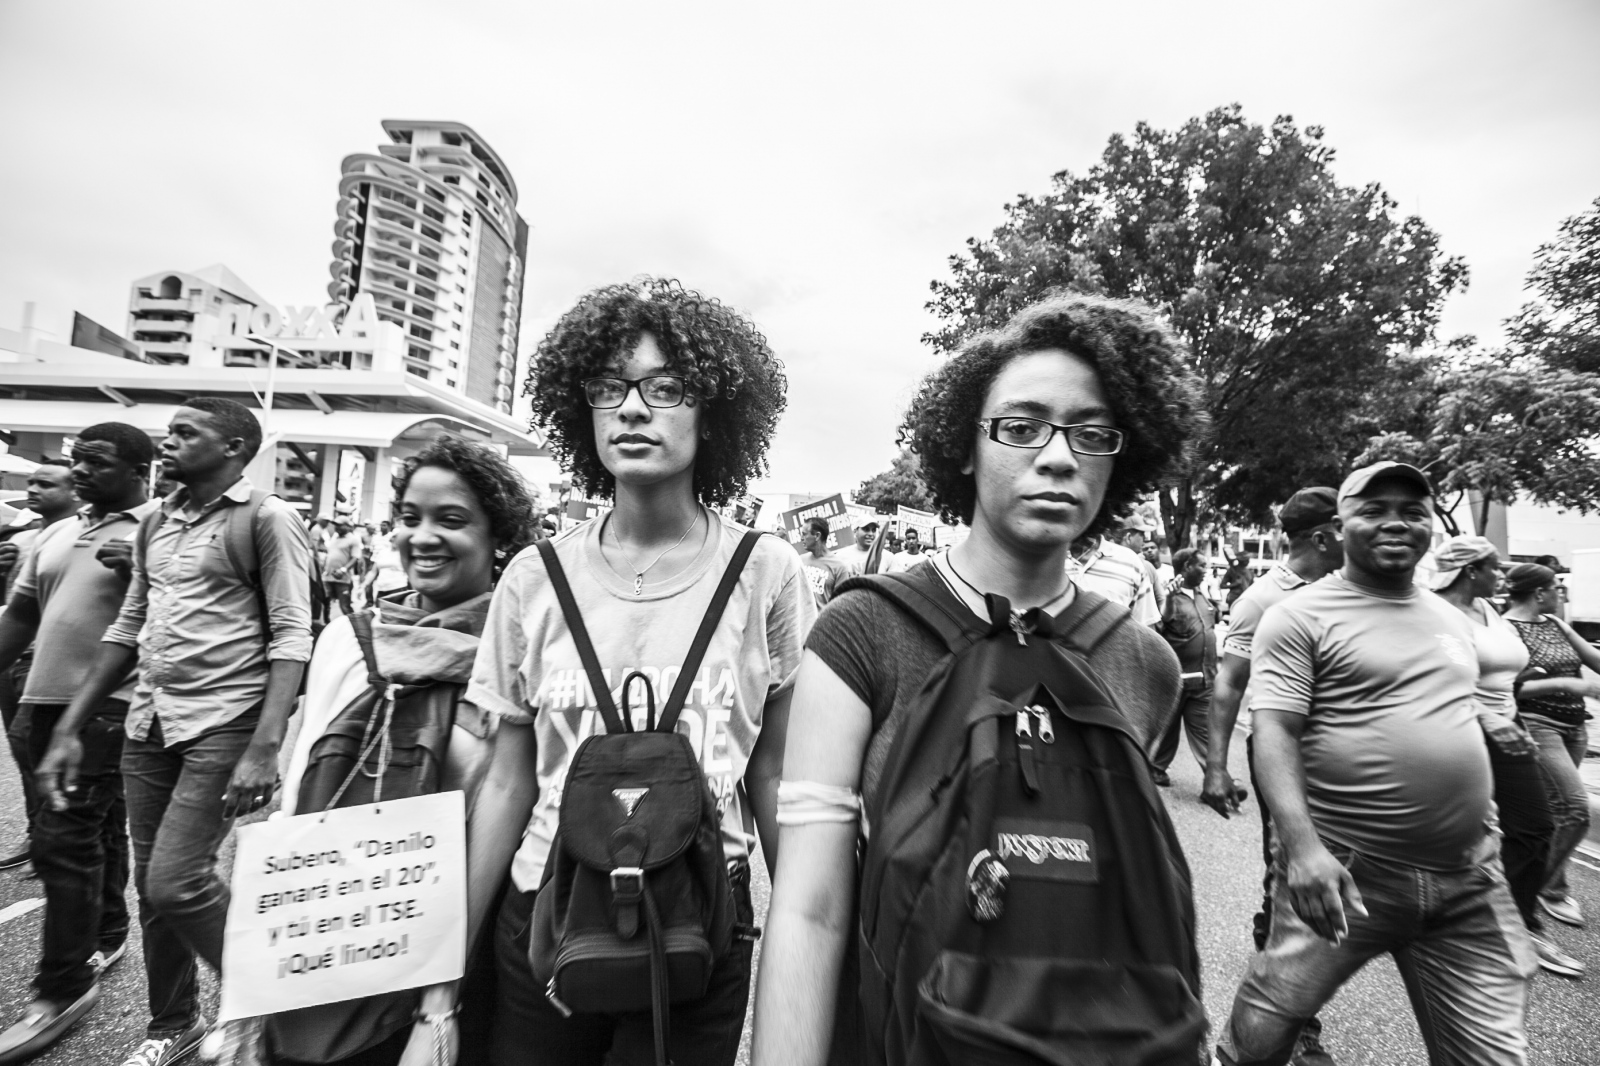 Dominican Republic: March Against Impunity